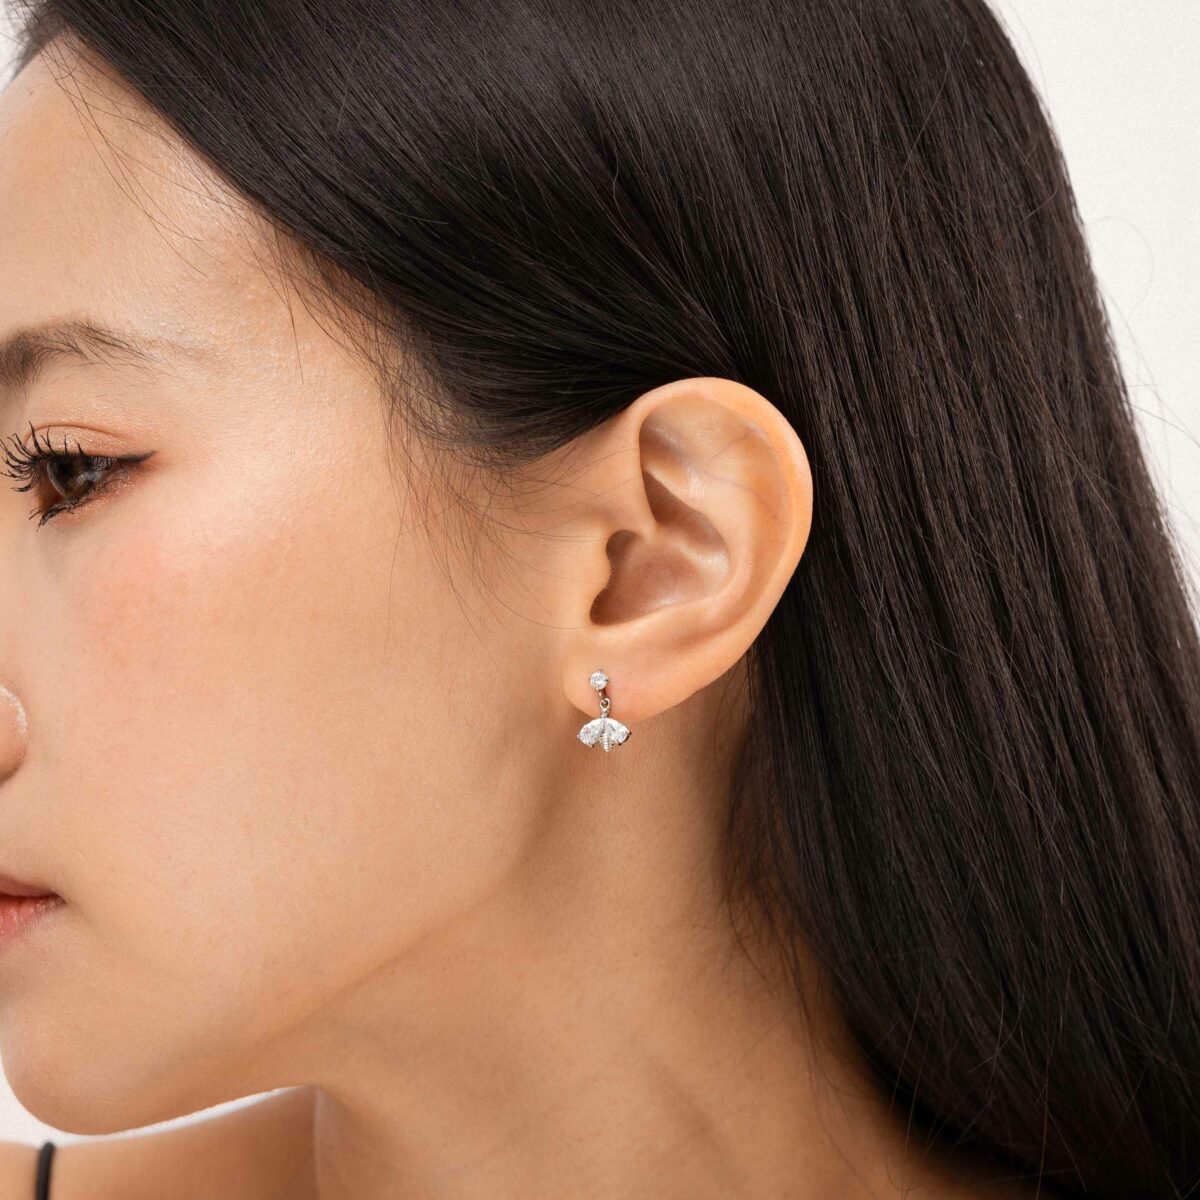 https://m.clubbella.co/product/buzz-earrings-24k-white-gold-plated/ BUZZ SILVER EARRINGS (2)